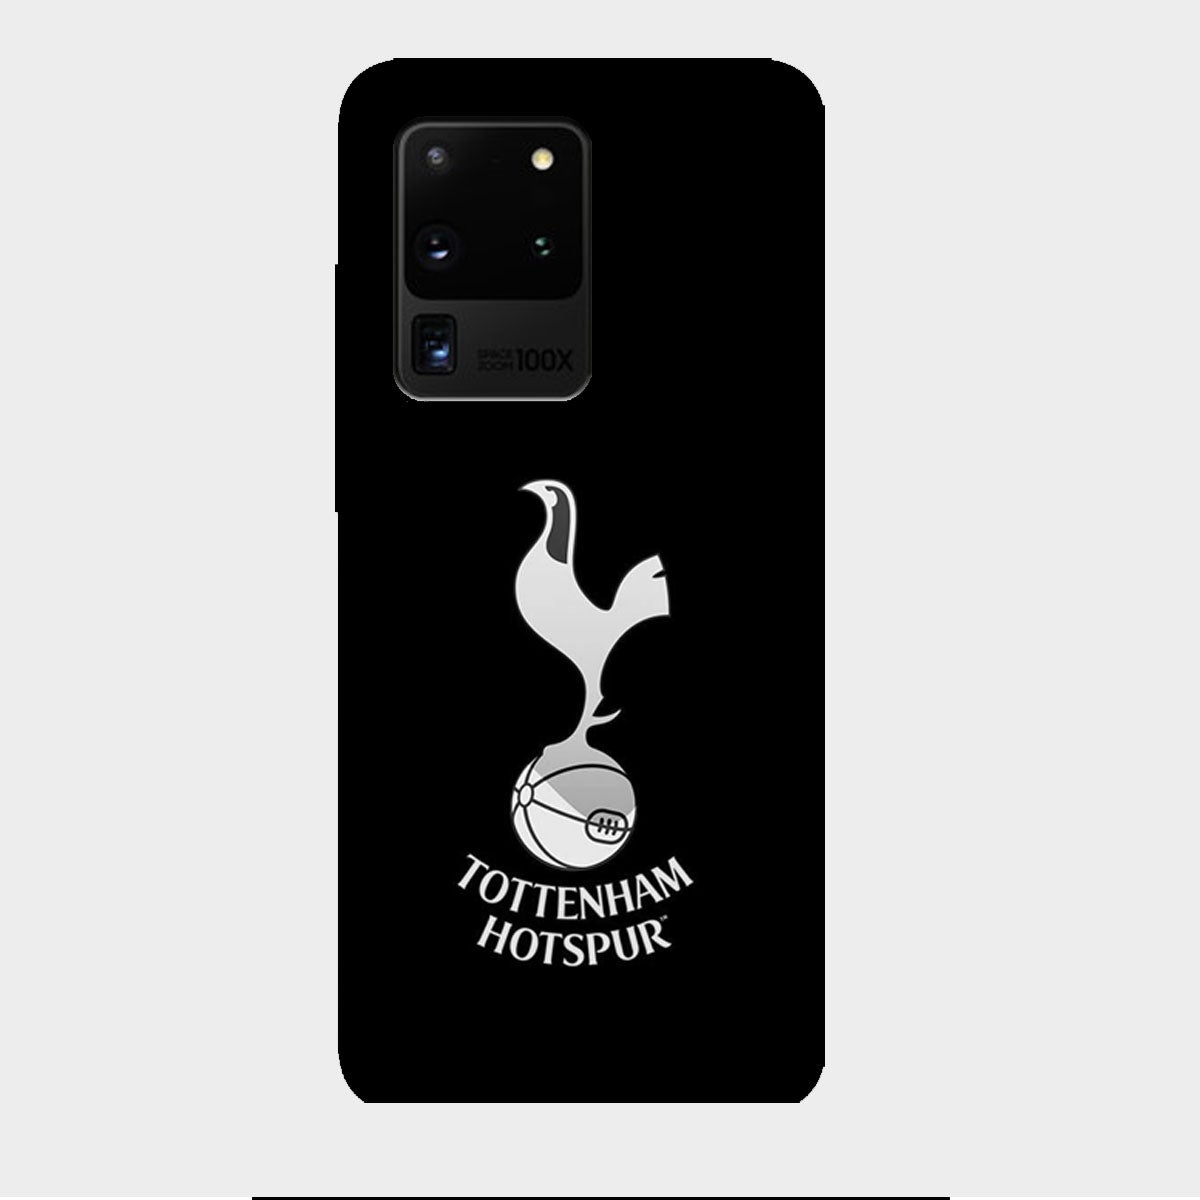 Tottenham Hotspurs - Black - Mobile Phone Cover - Hard Case - Samsung - Samsung